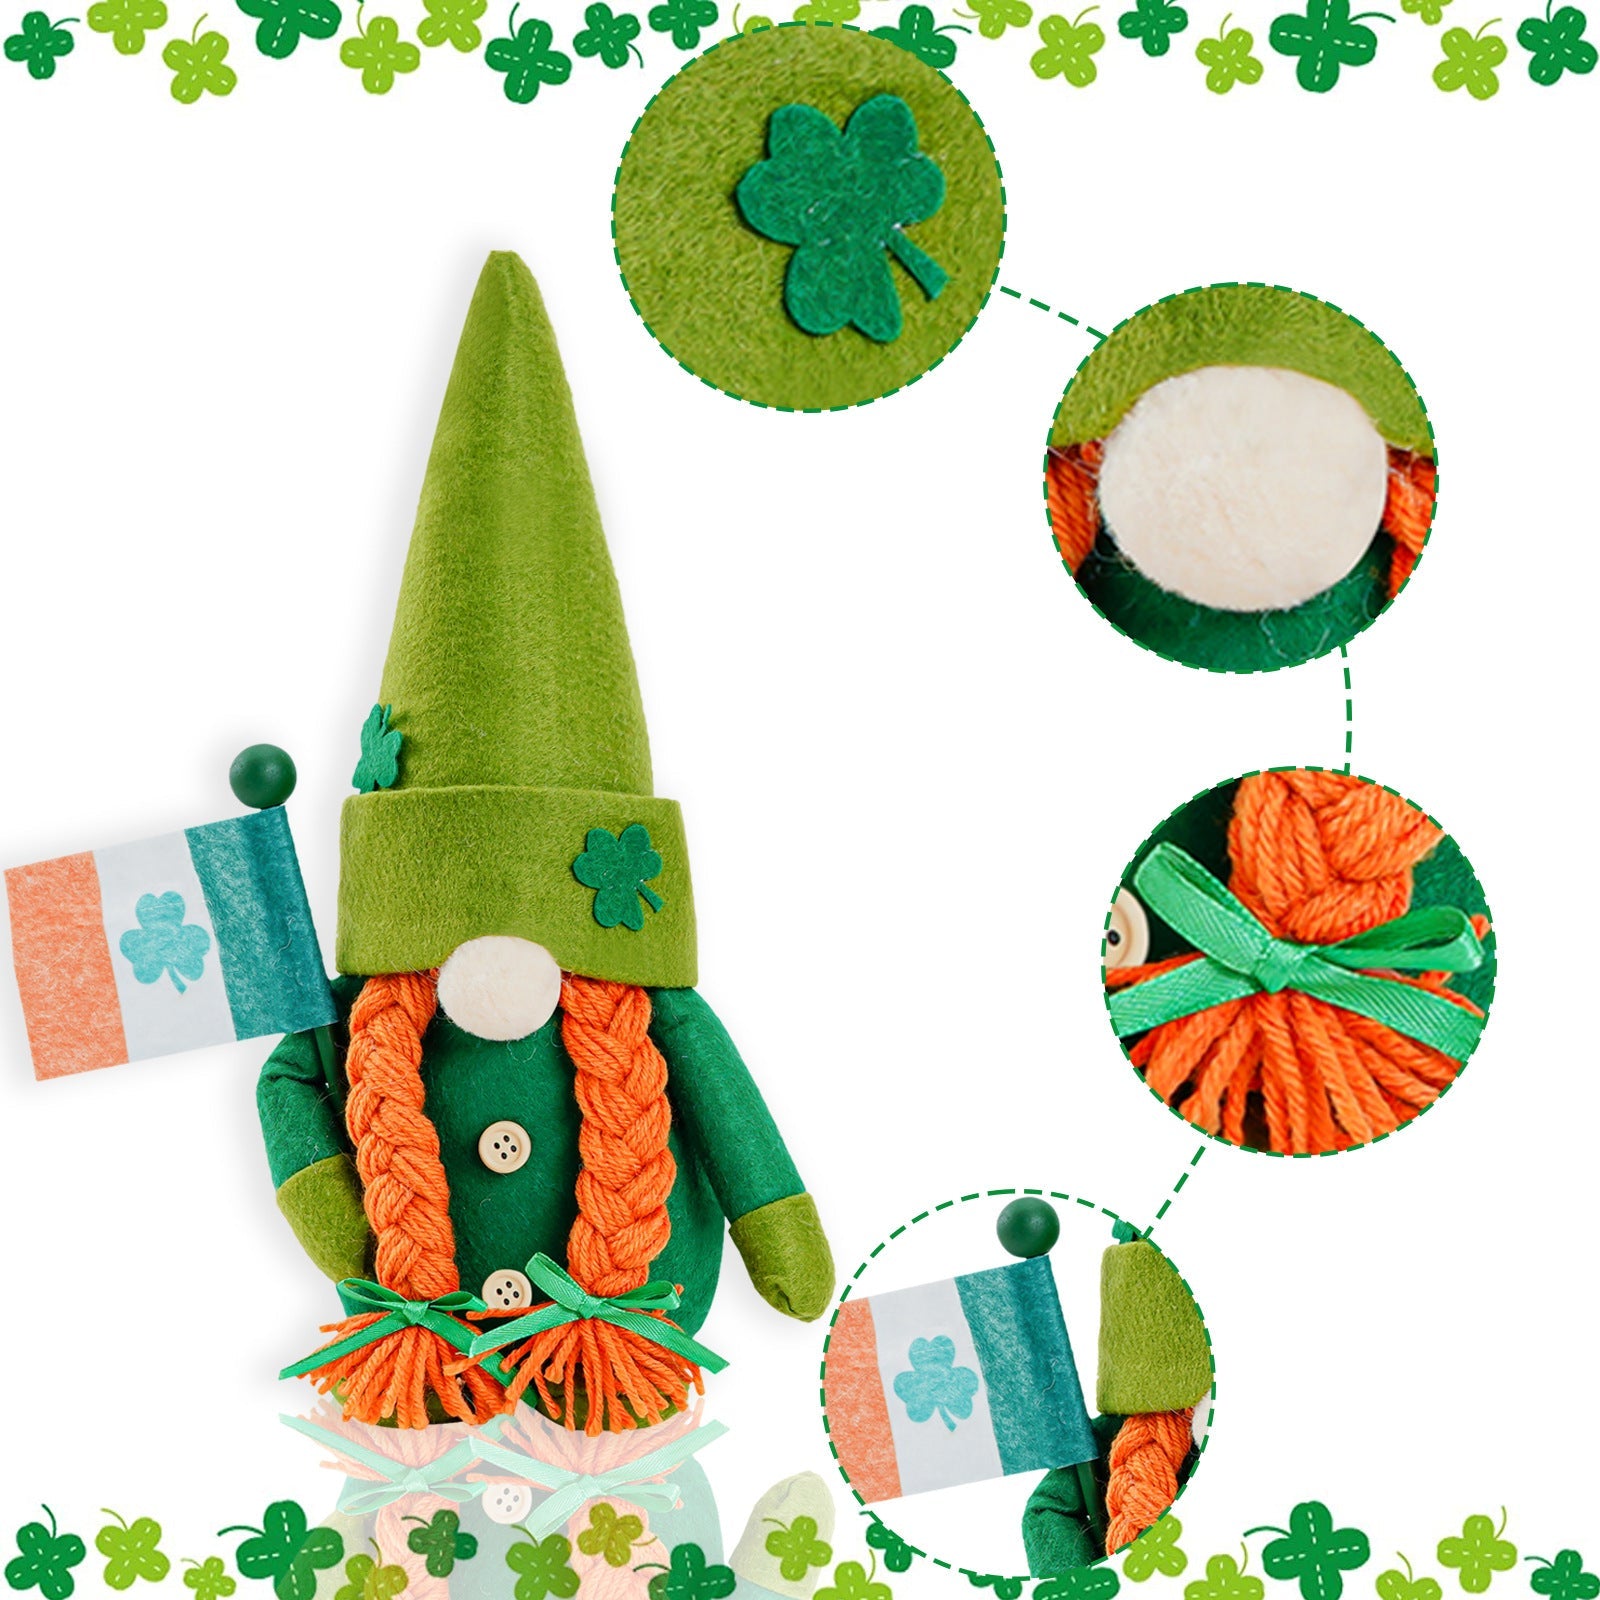 [1 left]St. Patrick's Day Green Hat Gnomes Holding Irish flag